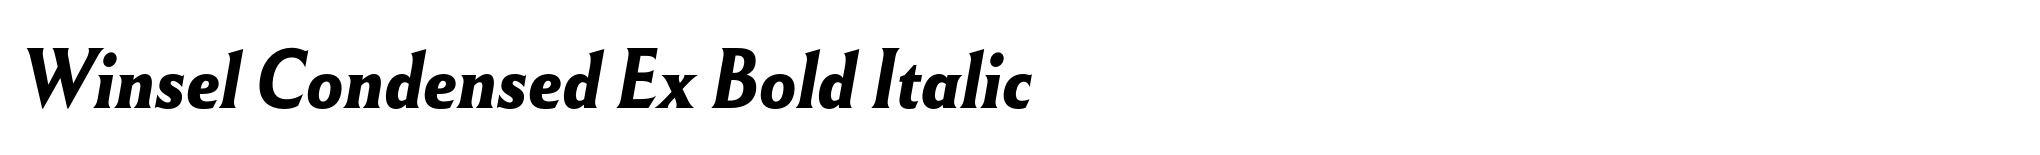 Winsel Condensed Ex Bold Italic image